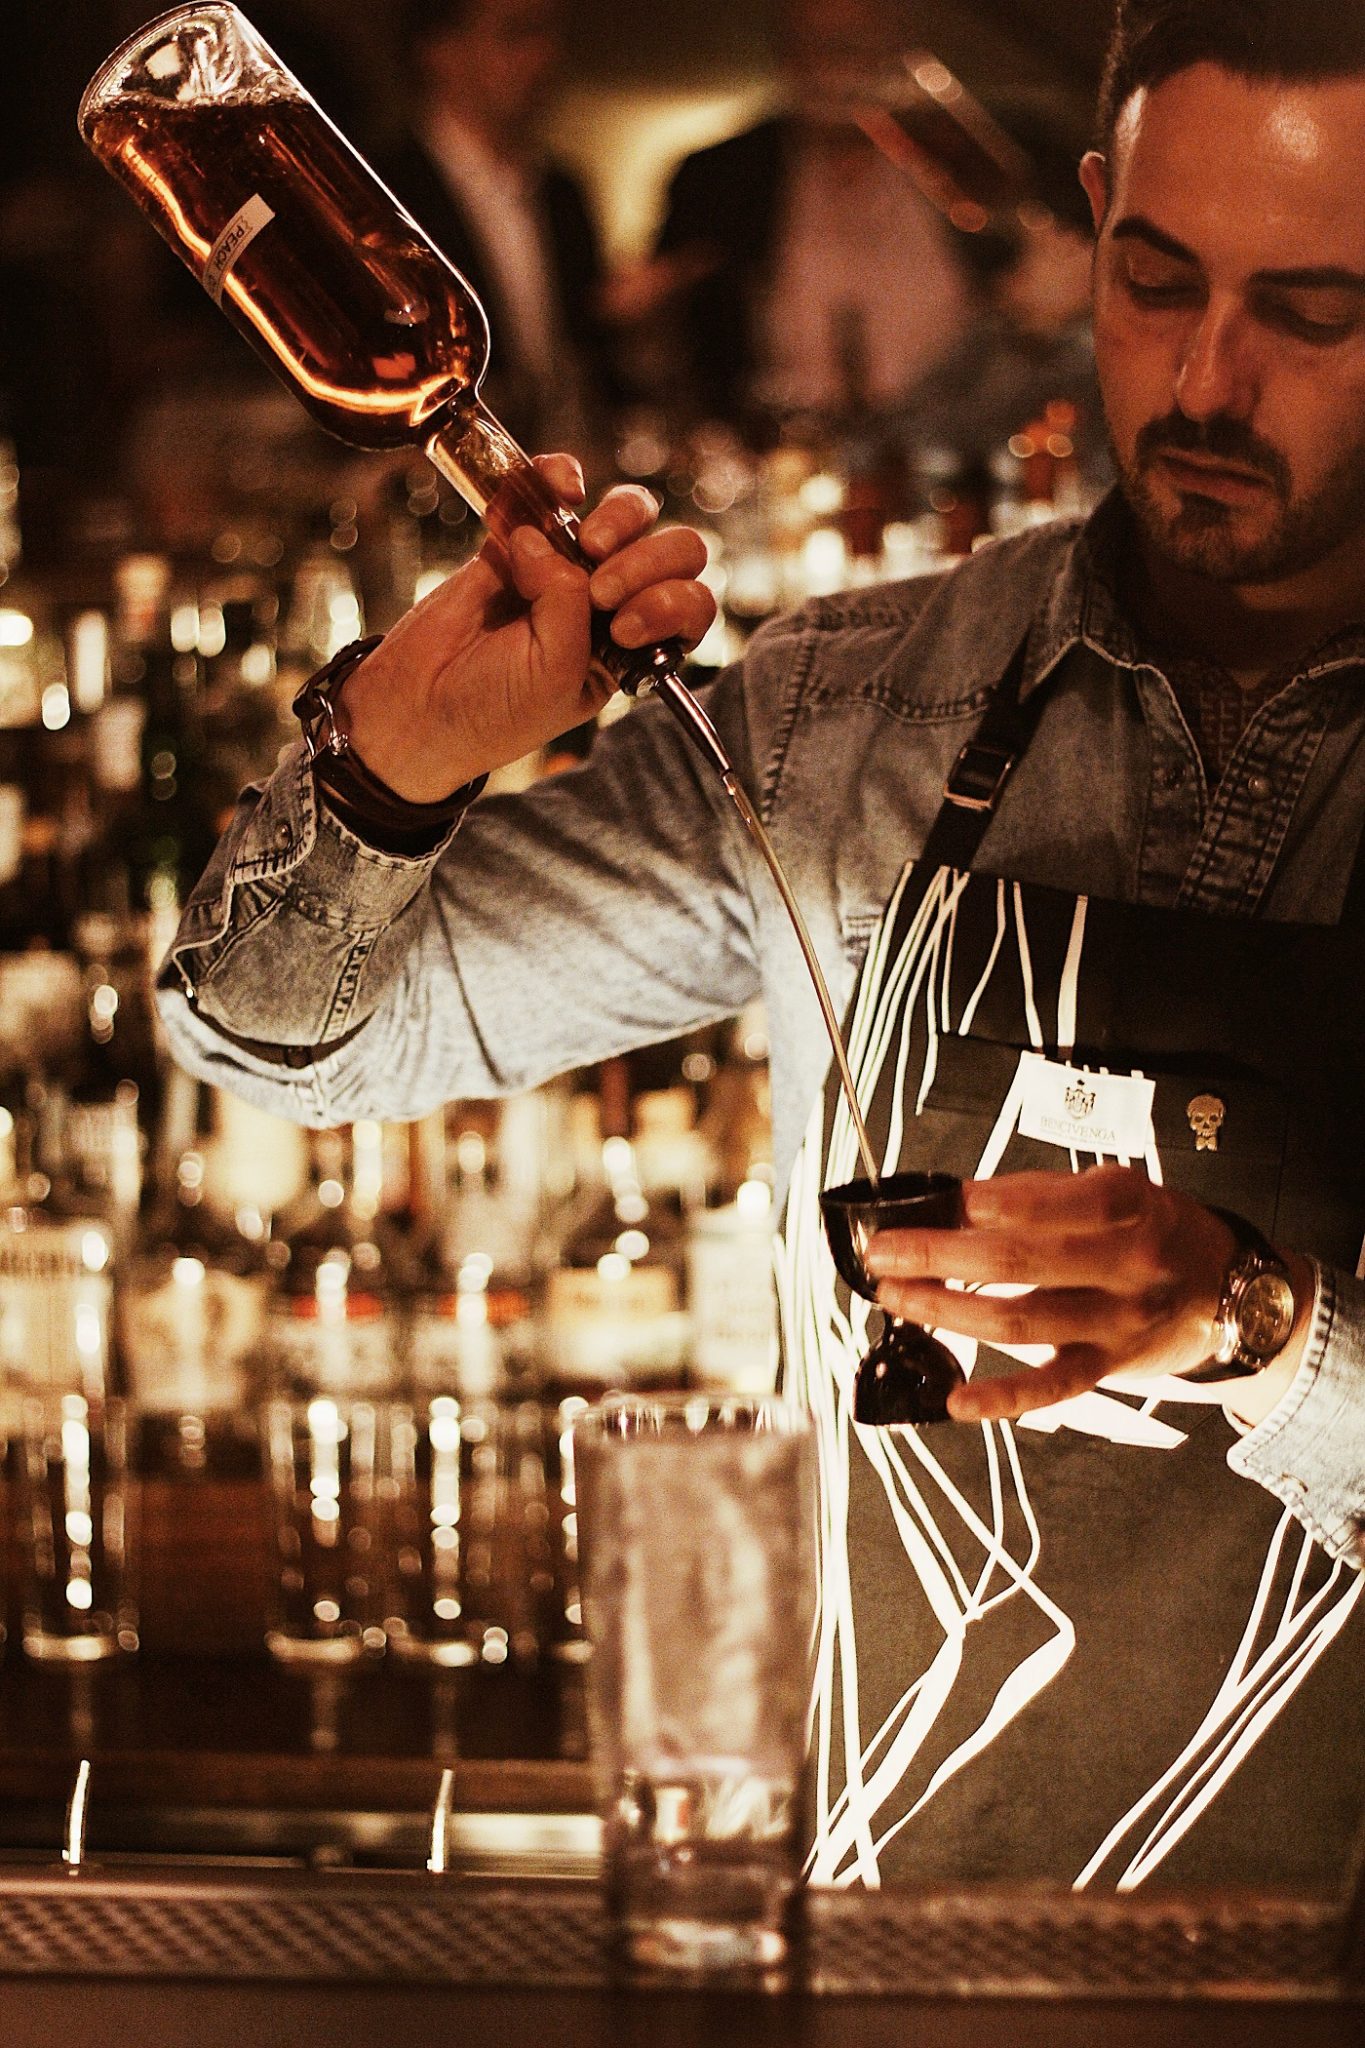 Anteprima di apertura del Cellar Bar “Oblio", con i cocktail a base di cognac hine, armagnac janneau e calvados boulard